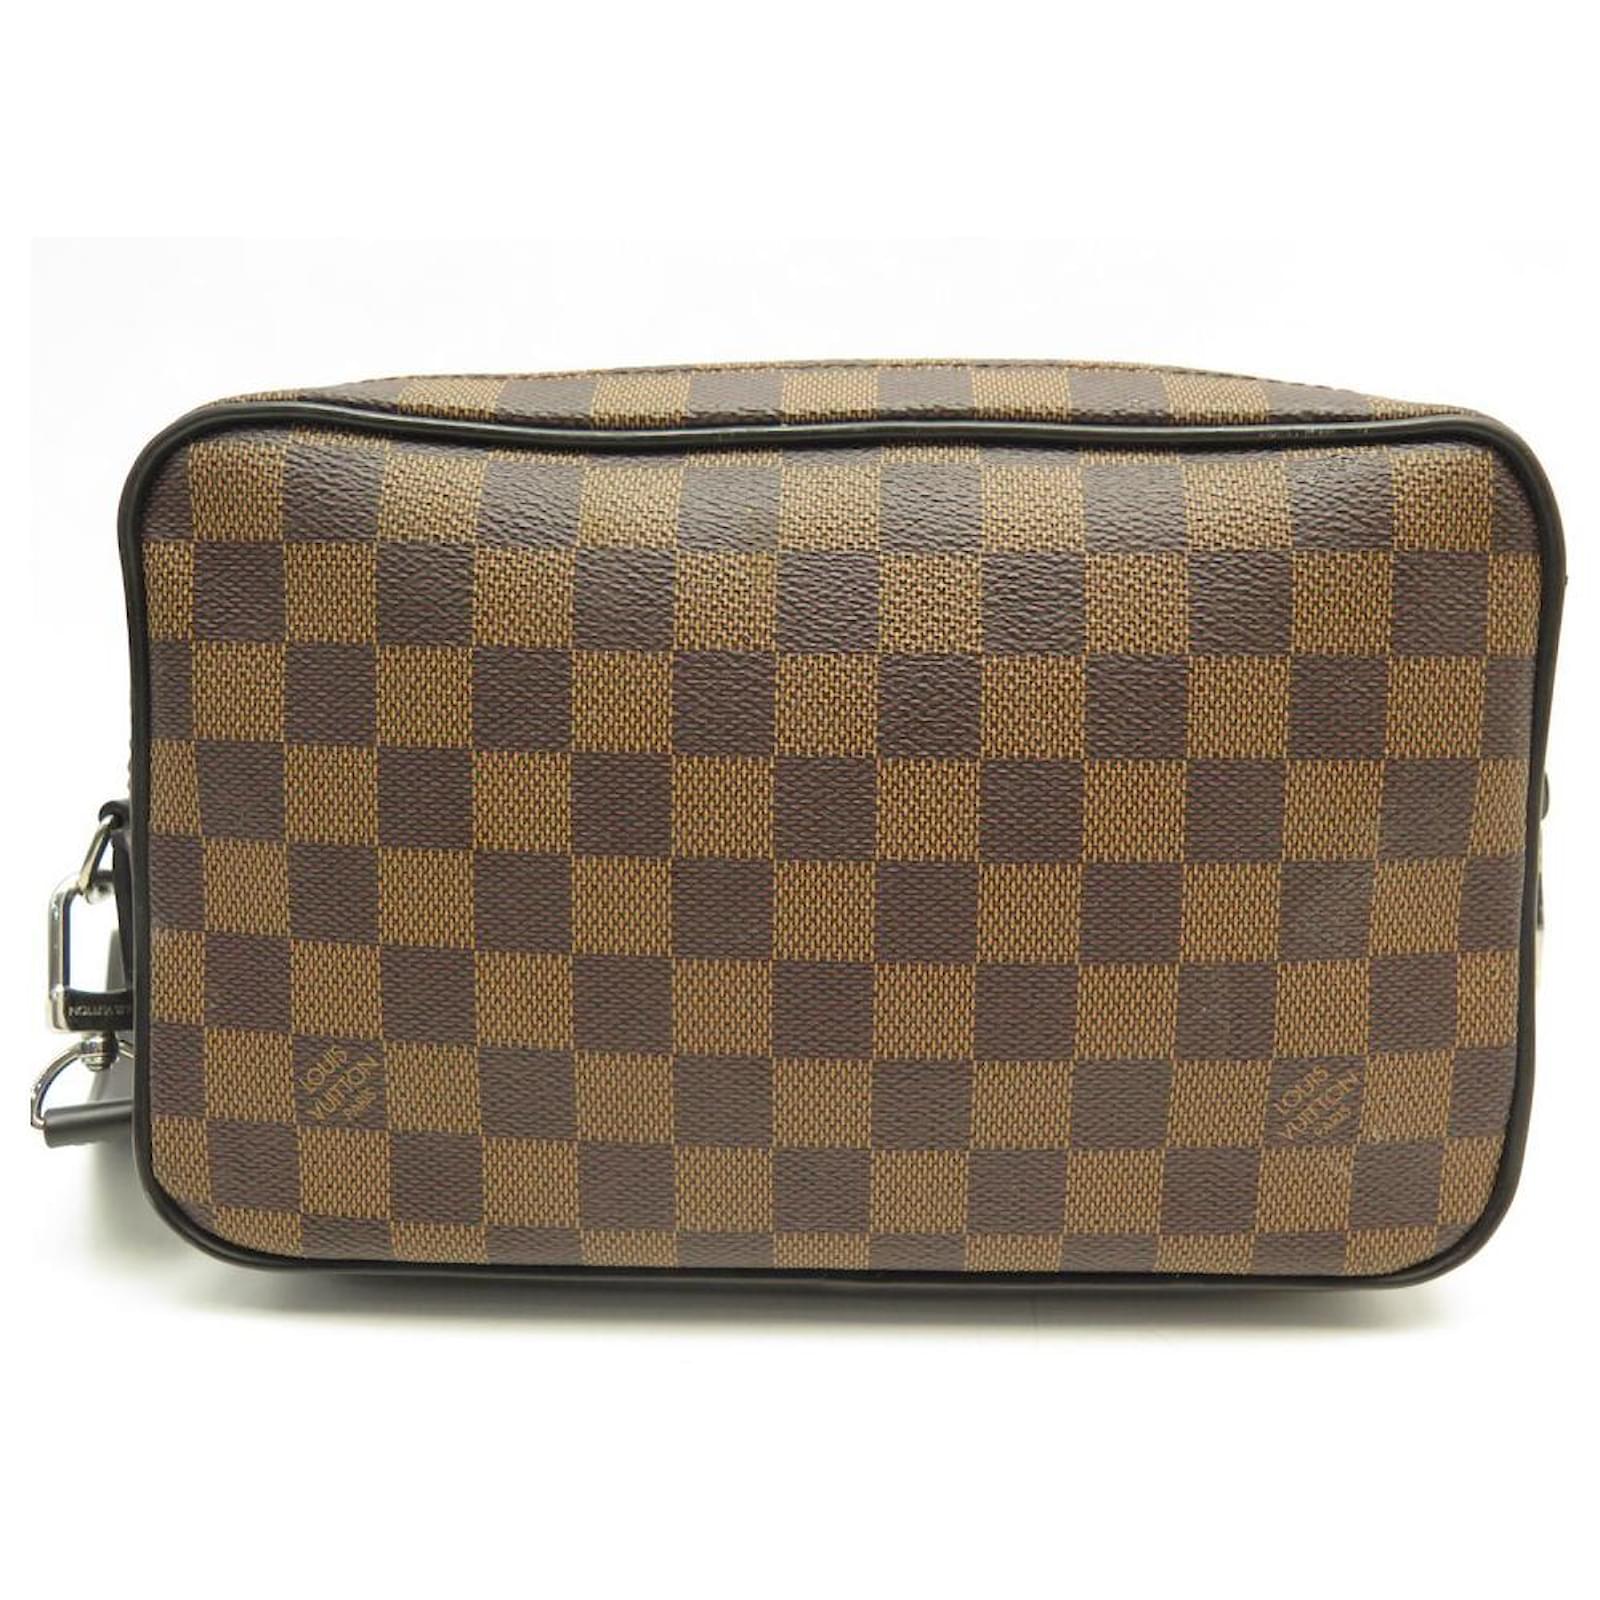 Brown 'LV' Leather Kasai Clutch Bag